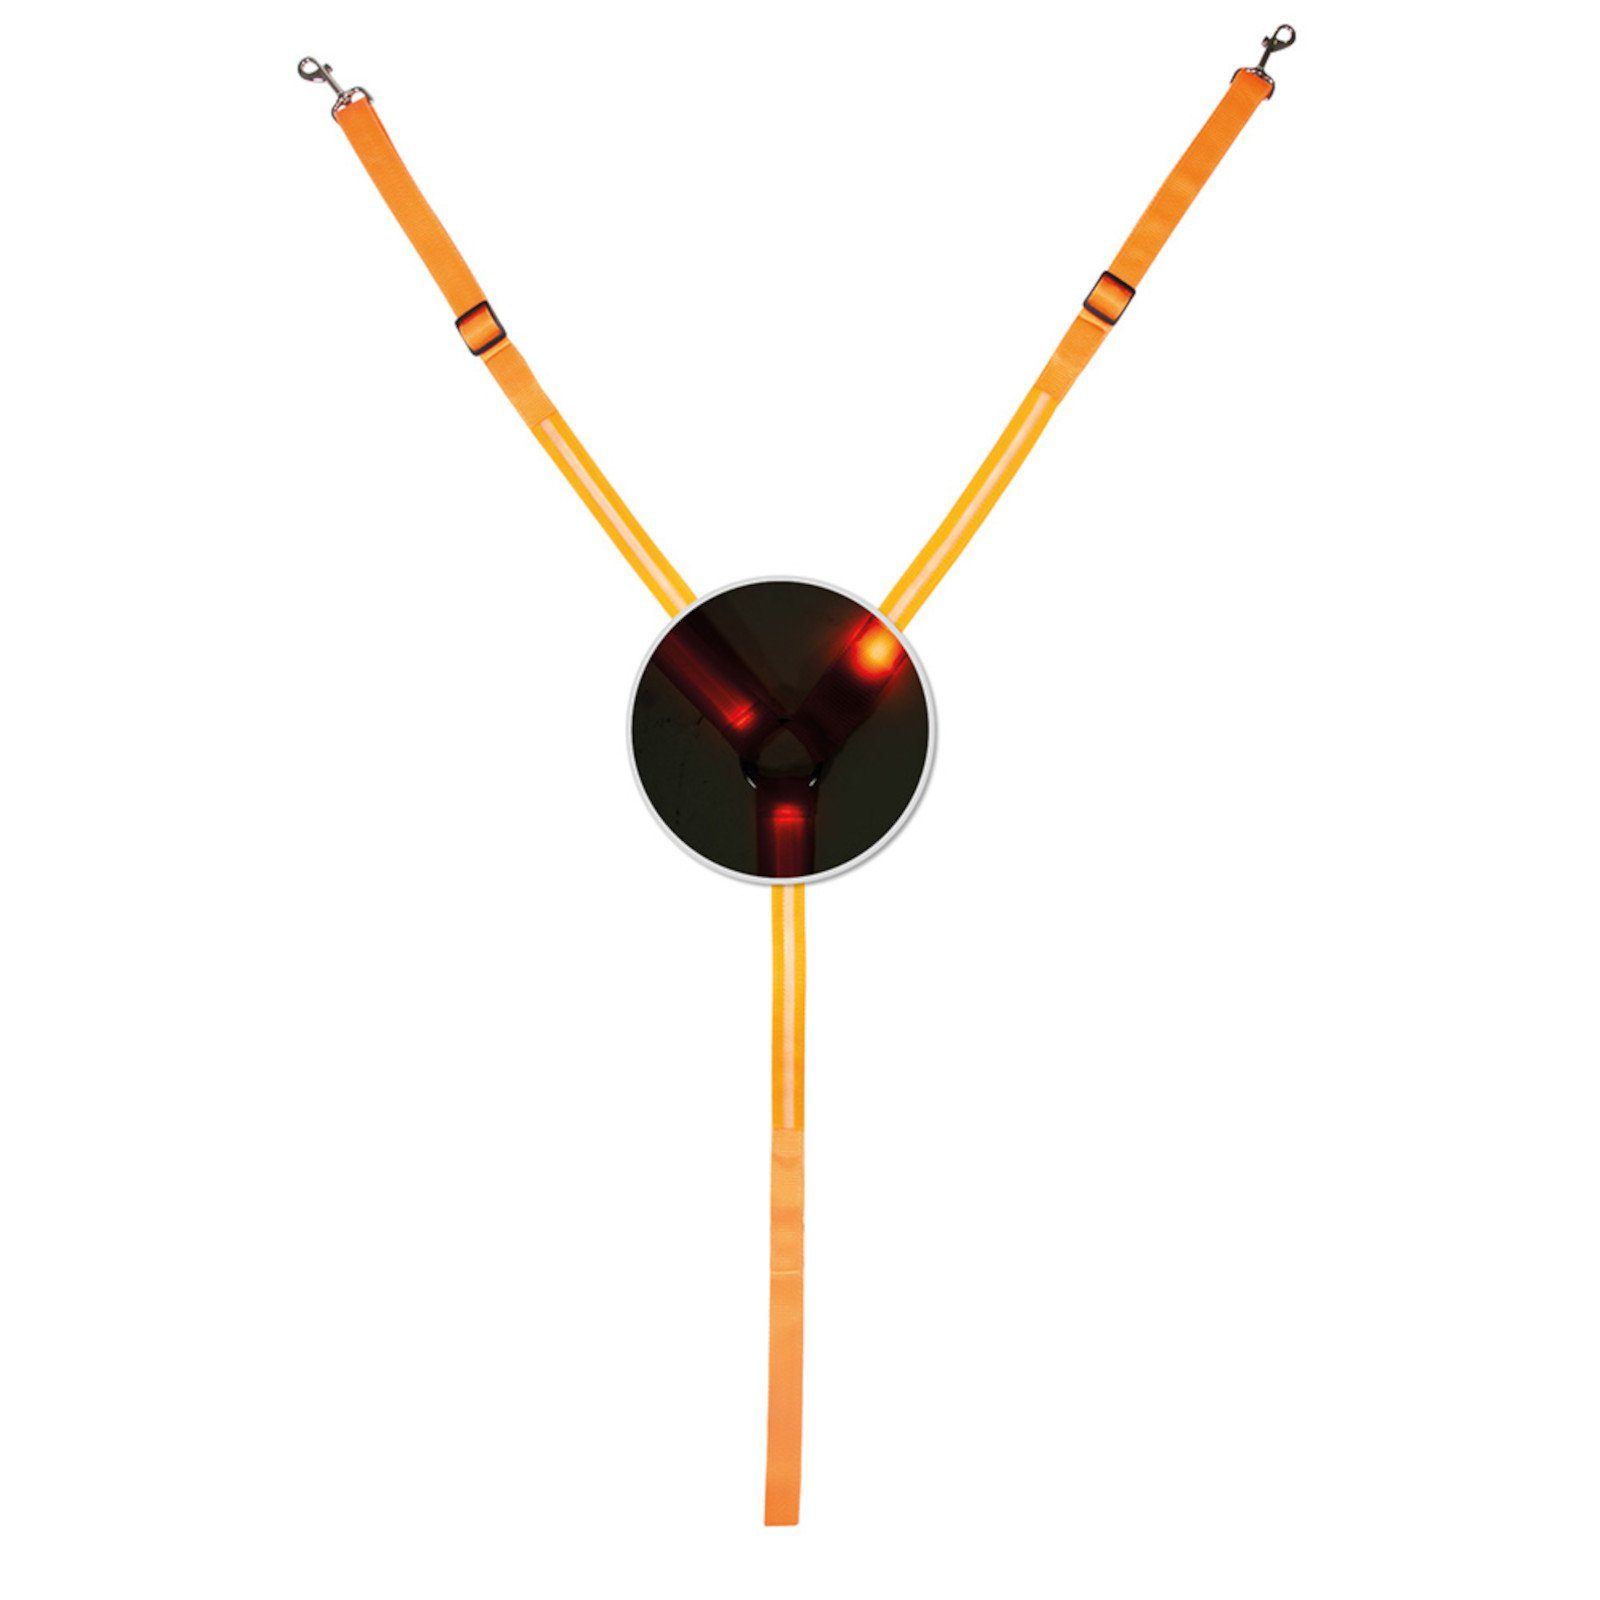 Reflektions-Vorderzeug PFIFF - Vorderzeug Warmblut) - LED orange (orange - Warmblut, Pfiff